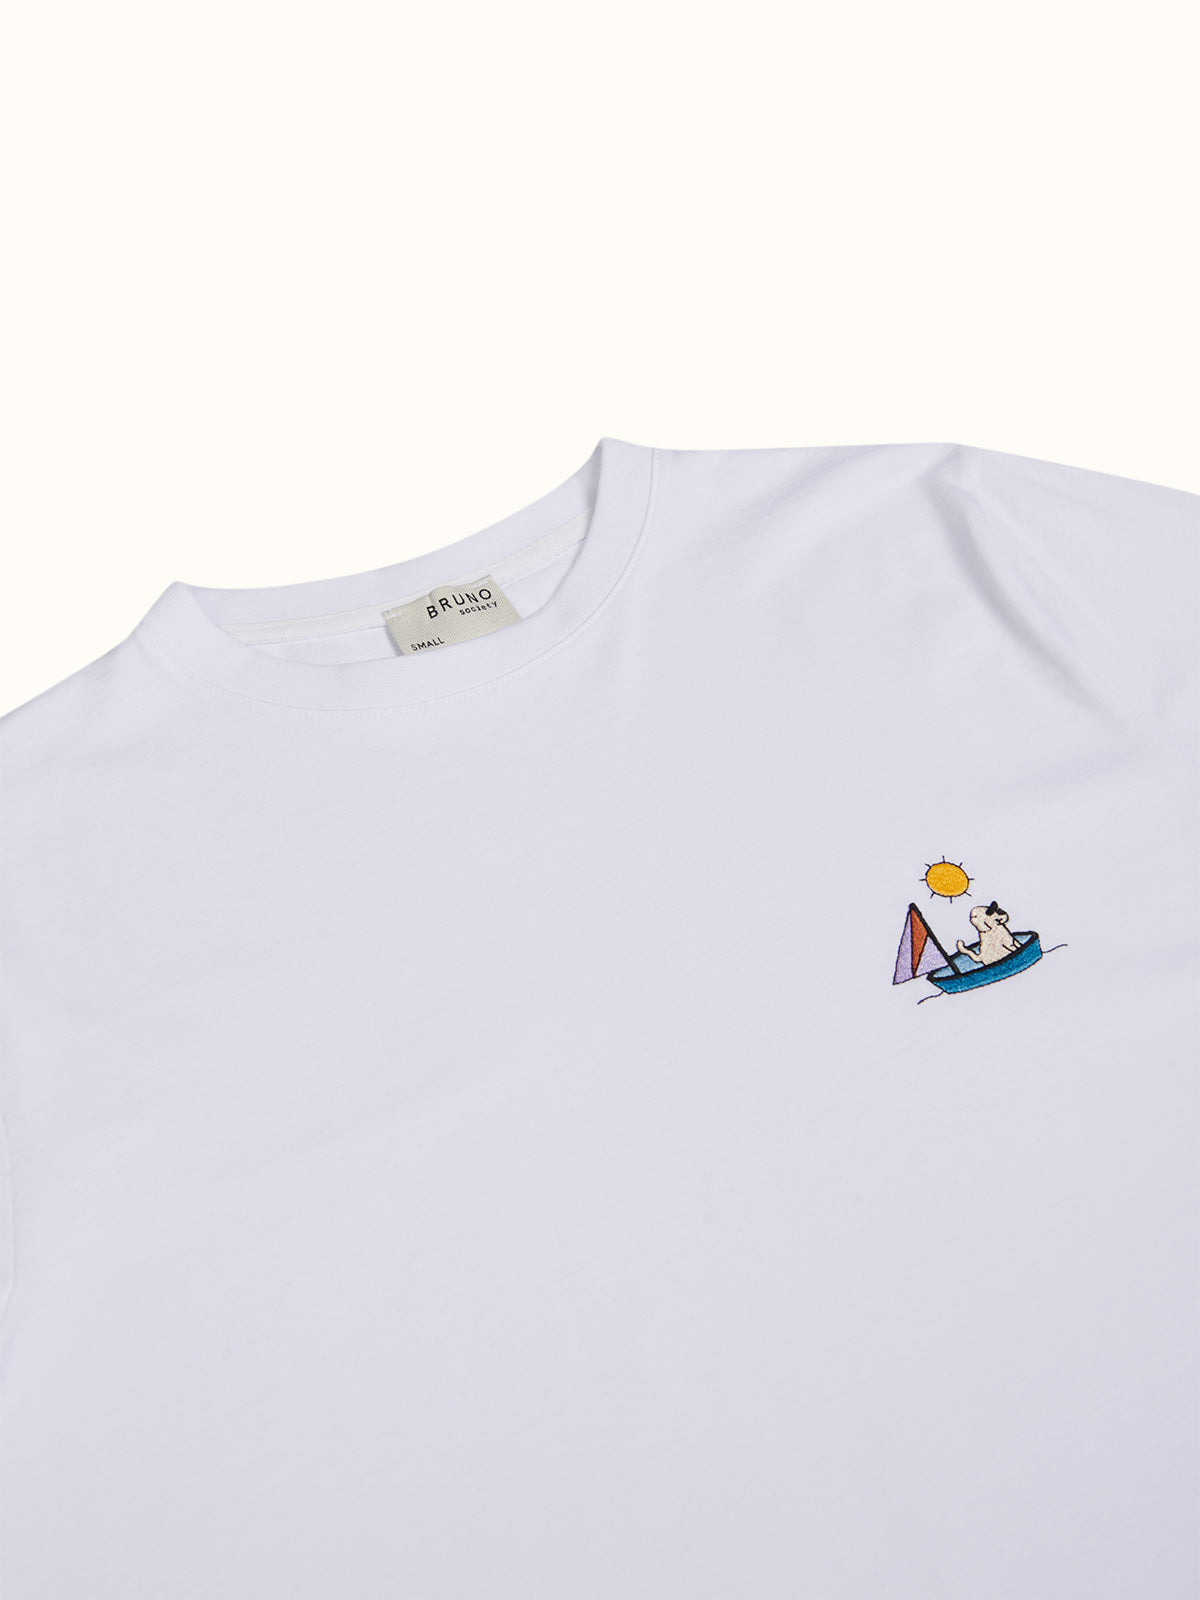 Sailor T-shirt - White